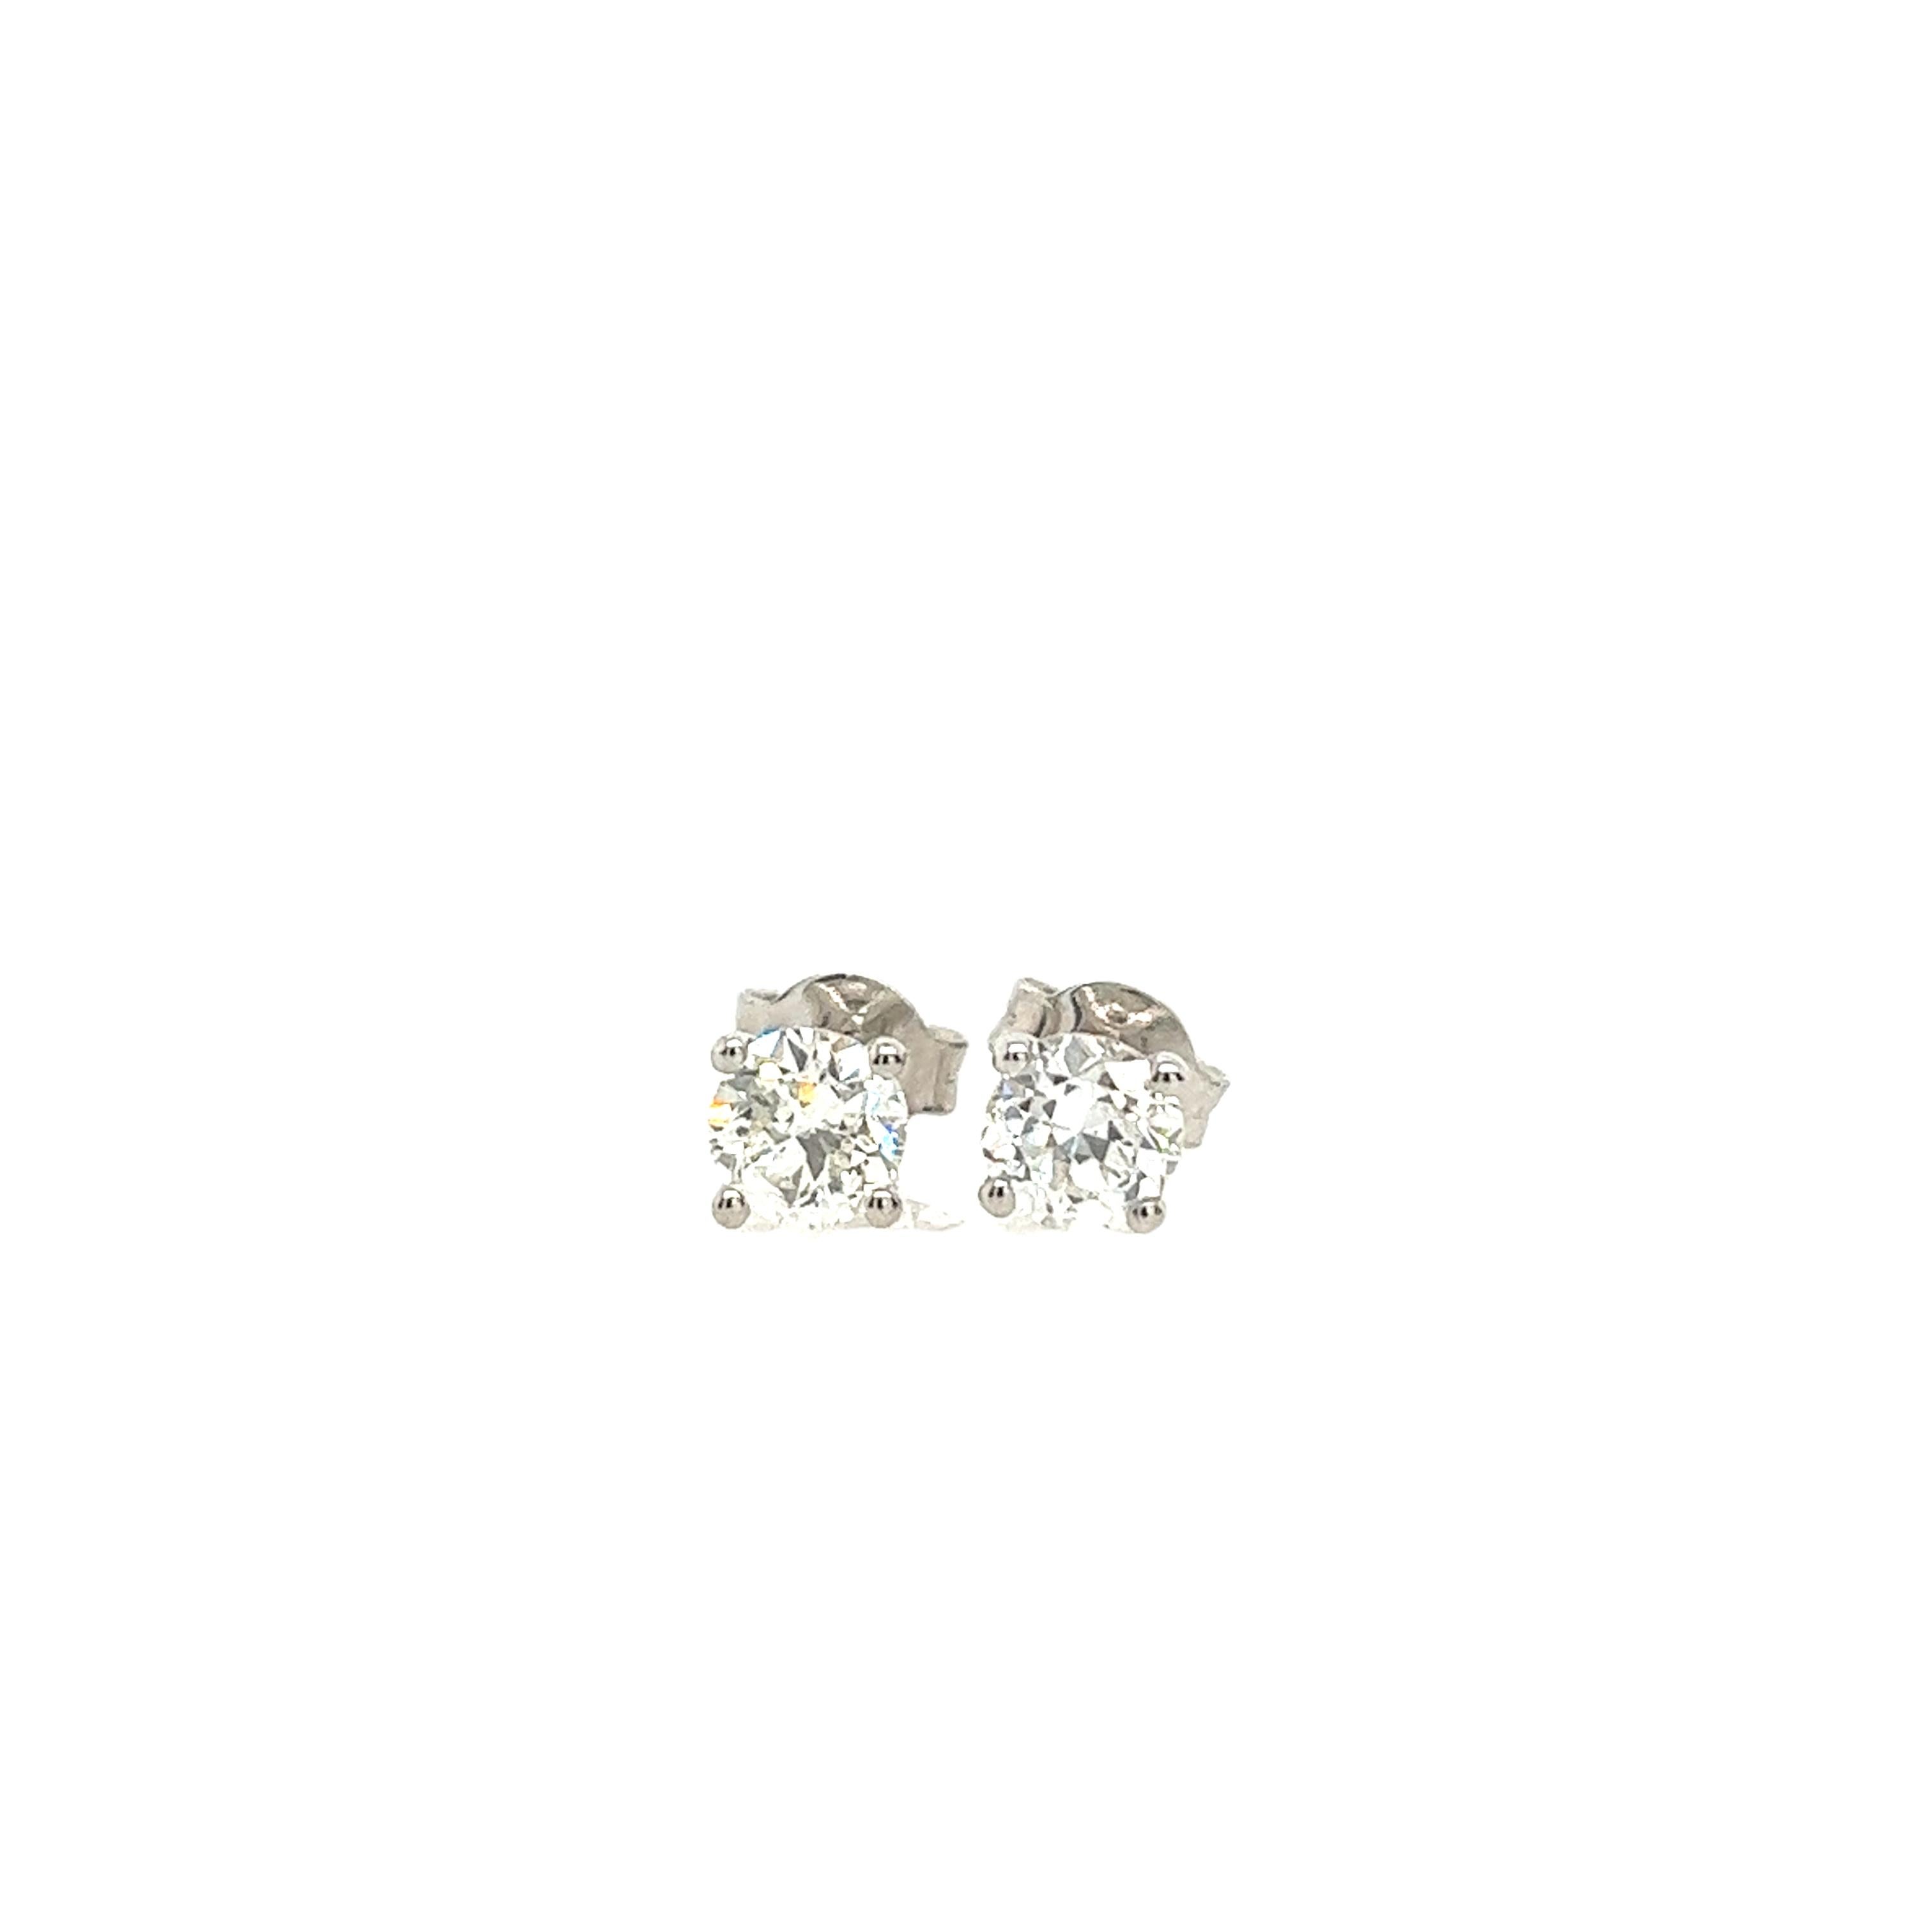 Women's 18ct White Gold Diamond Stud Earrings, 1.23ct Total Diamond Weight